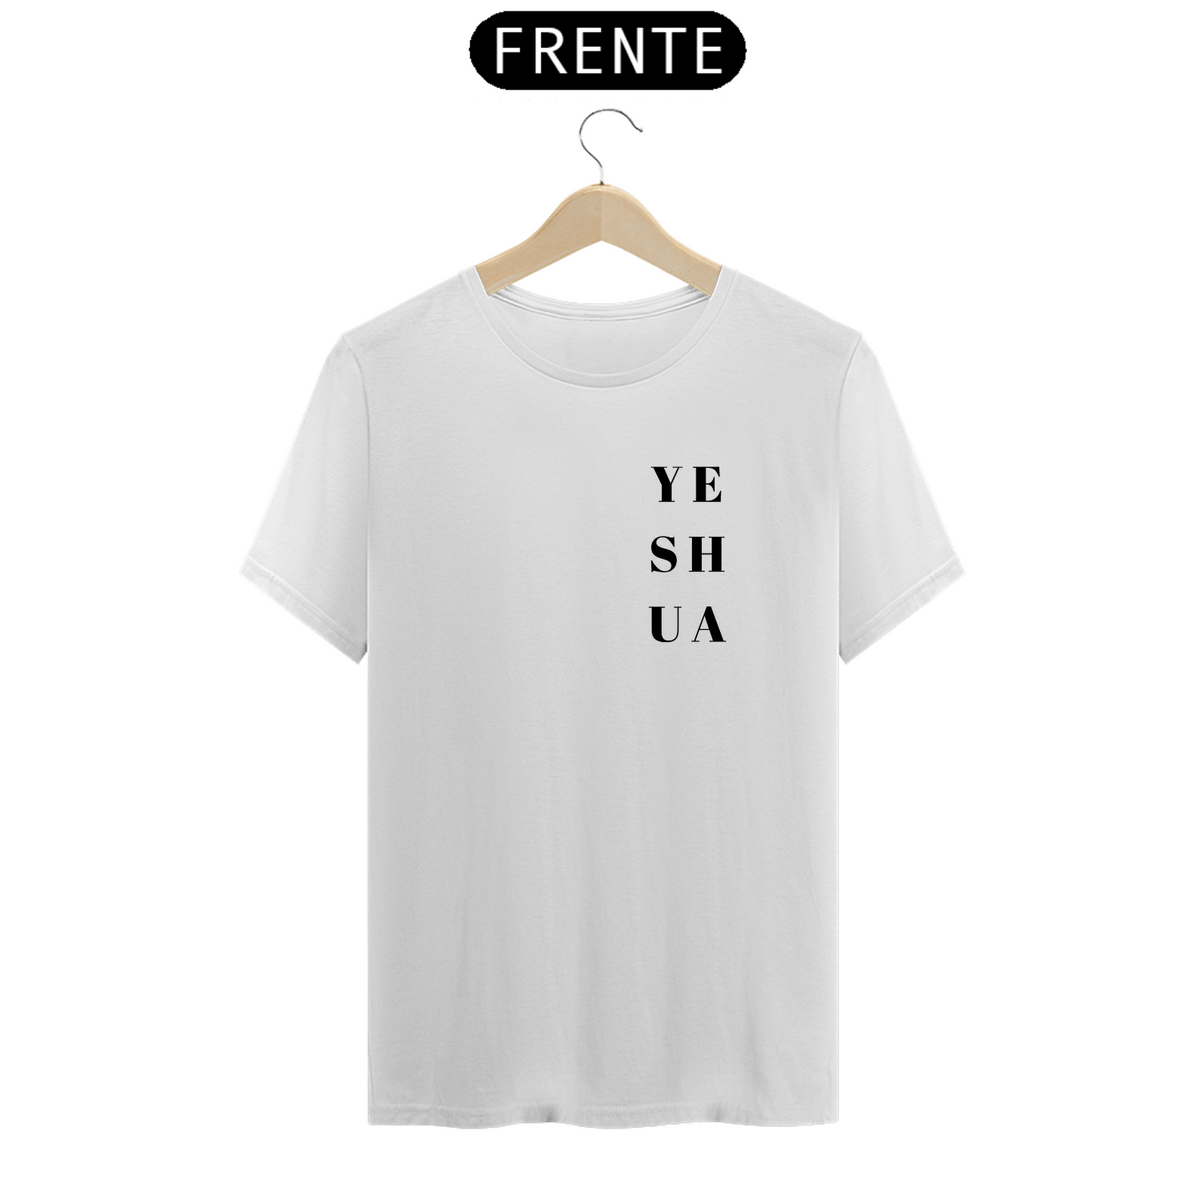 Nome do produto: Camisa Yeshua